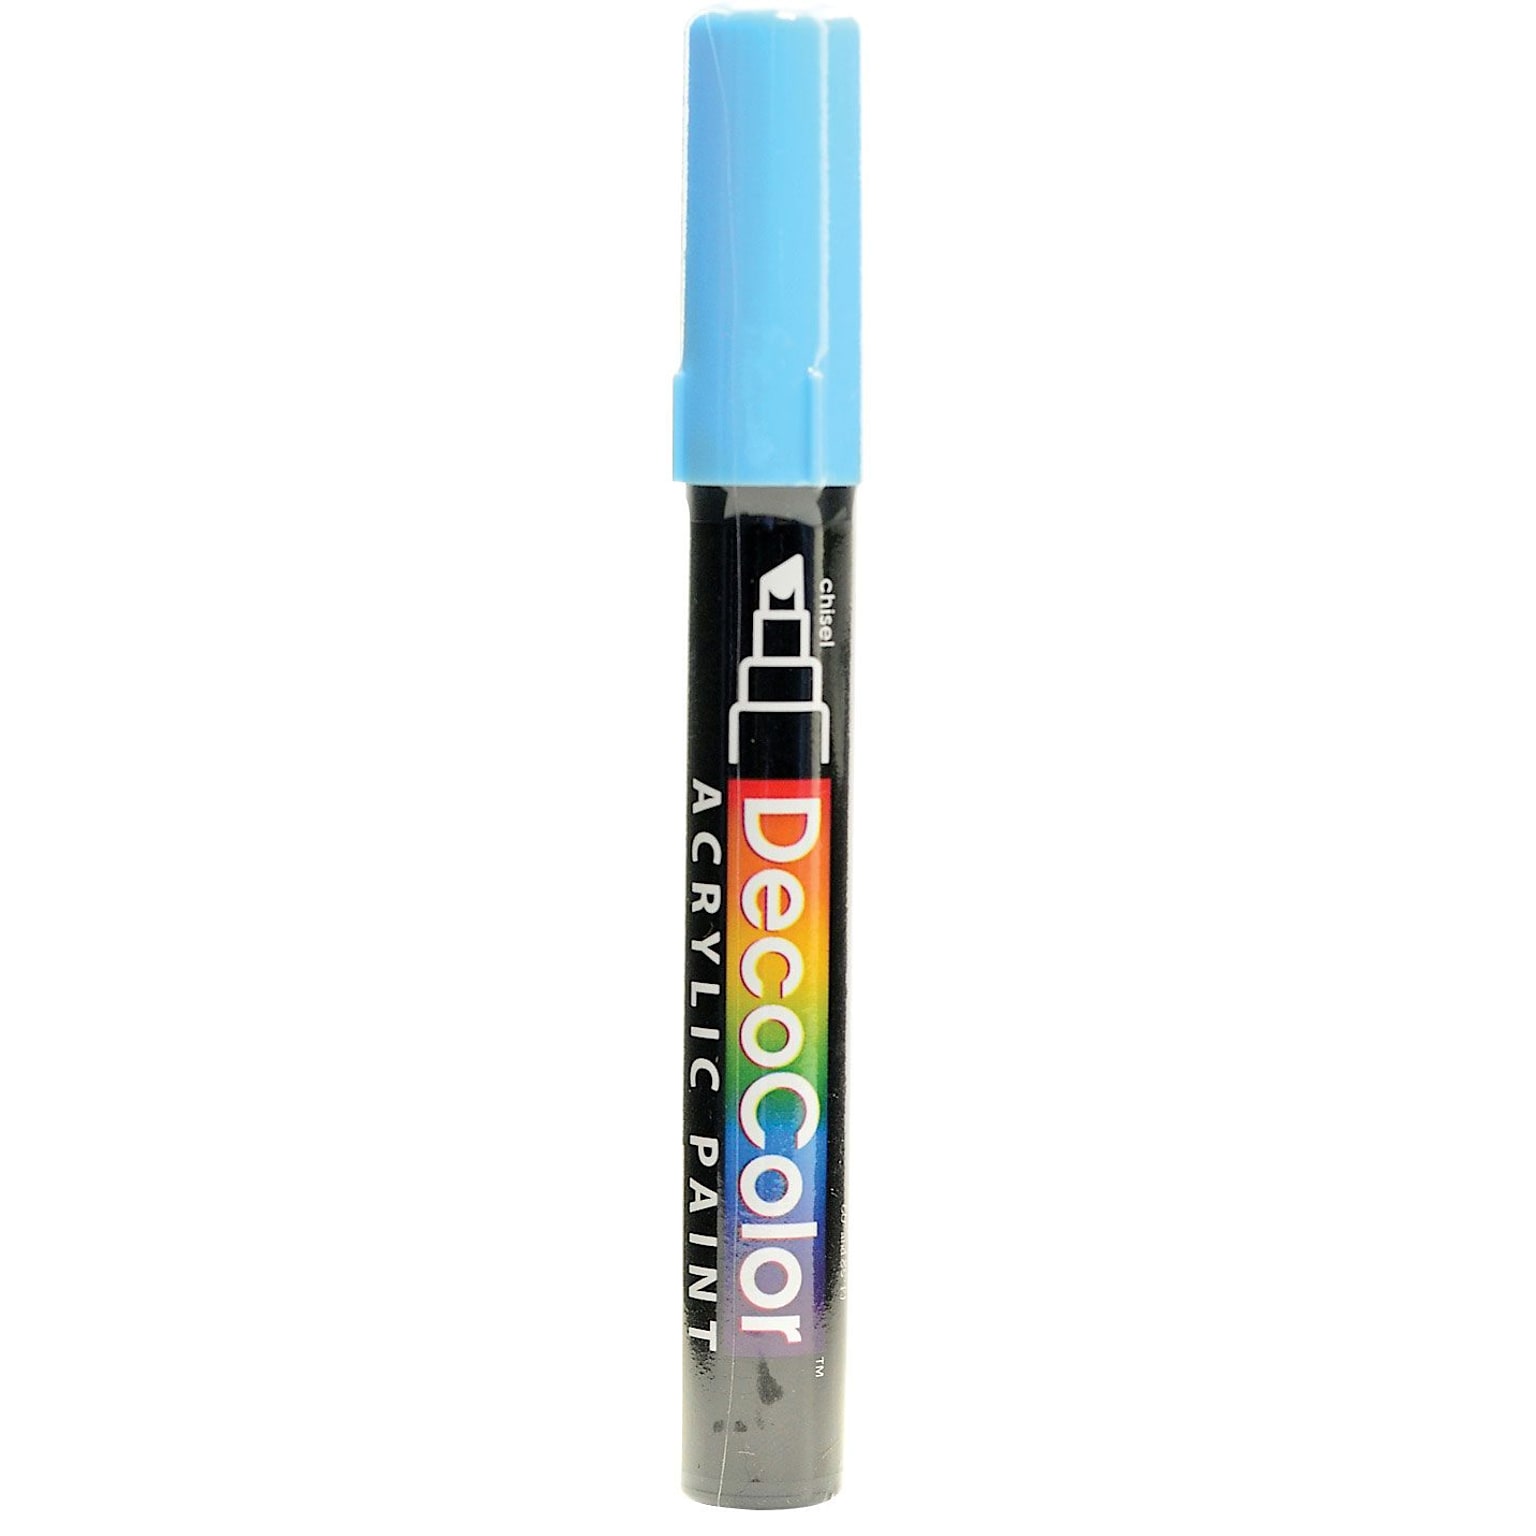 Marvy Uchida Decocolor Acrylic Paint Markers Aquamarine Chisel Tip [Pack Of 6]